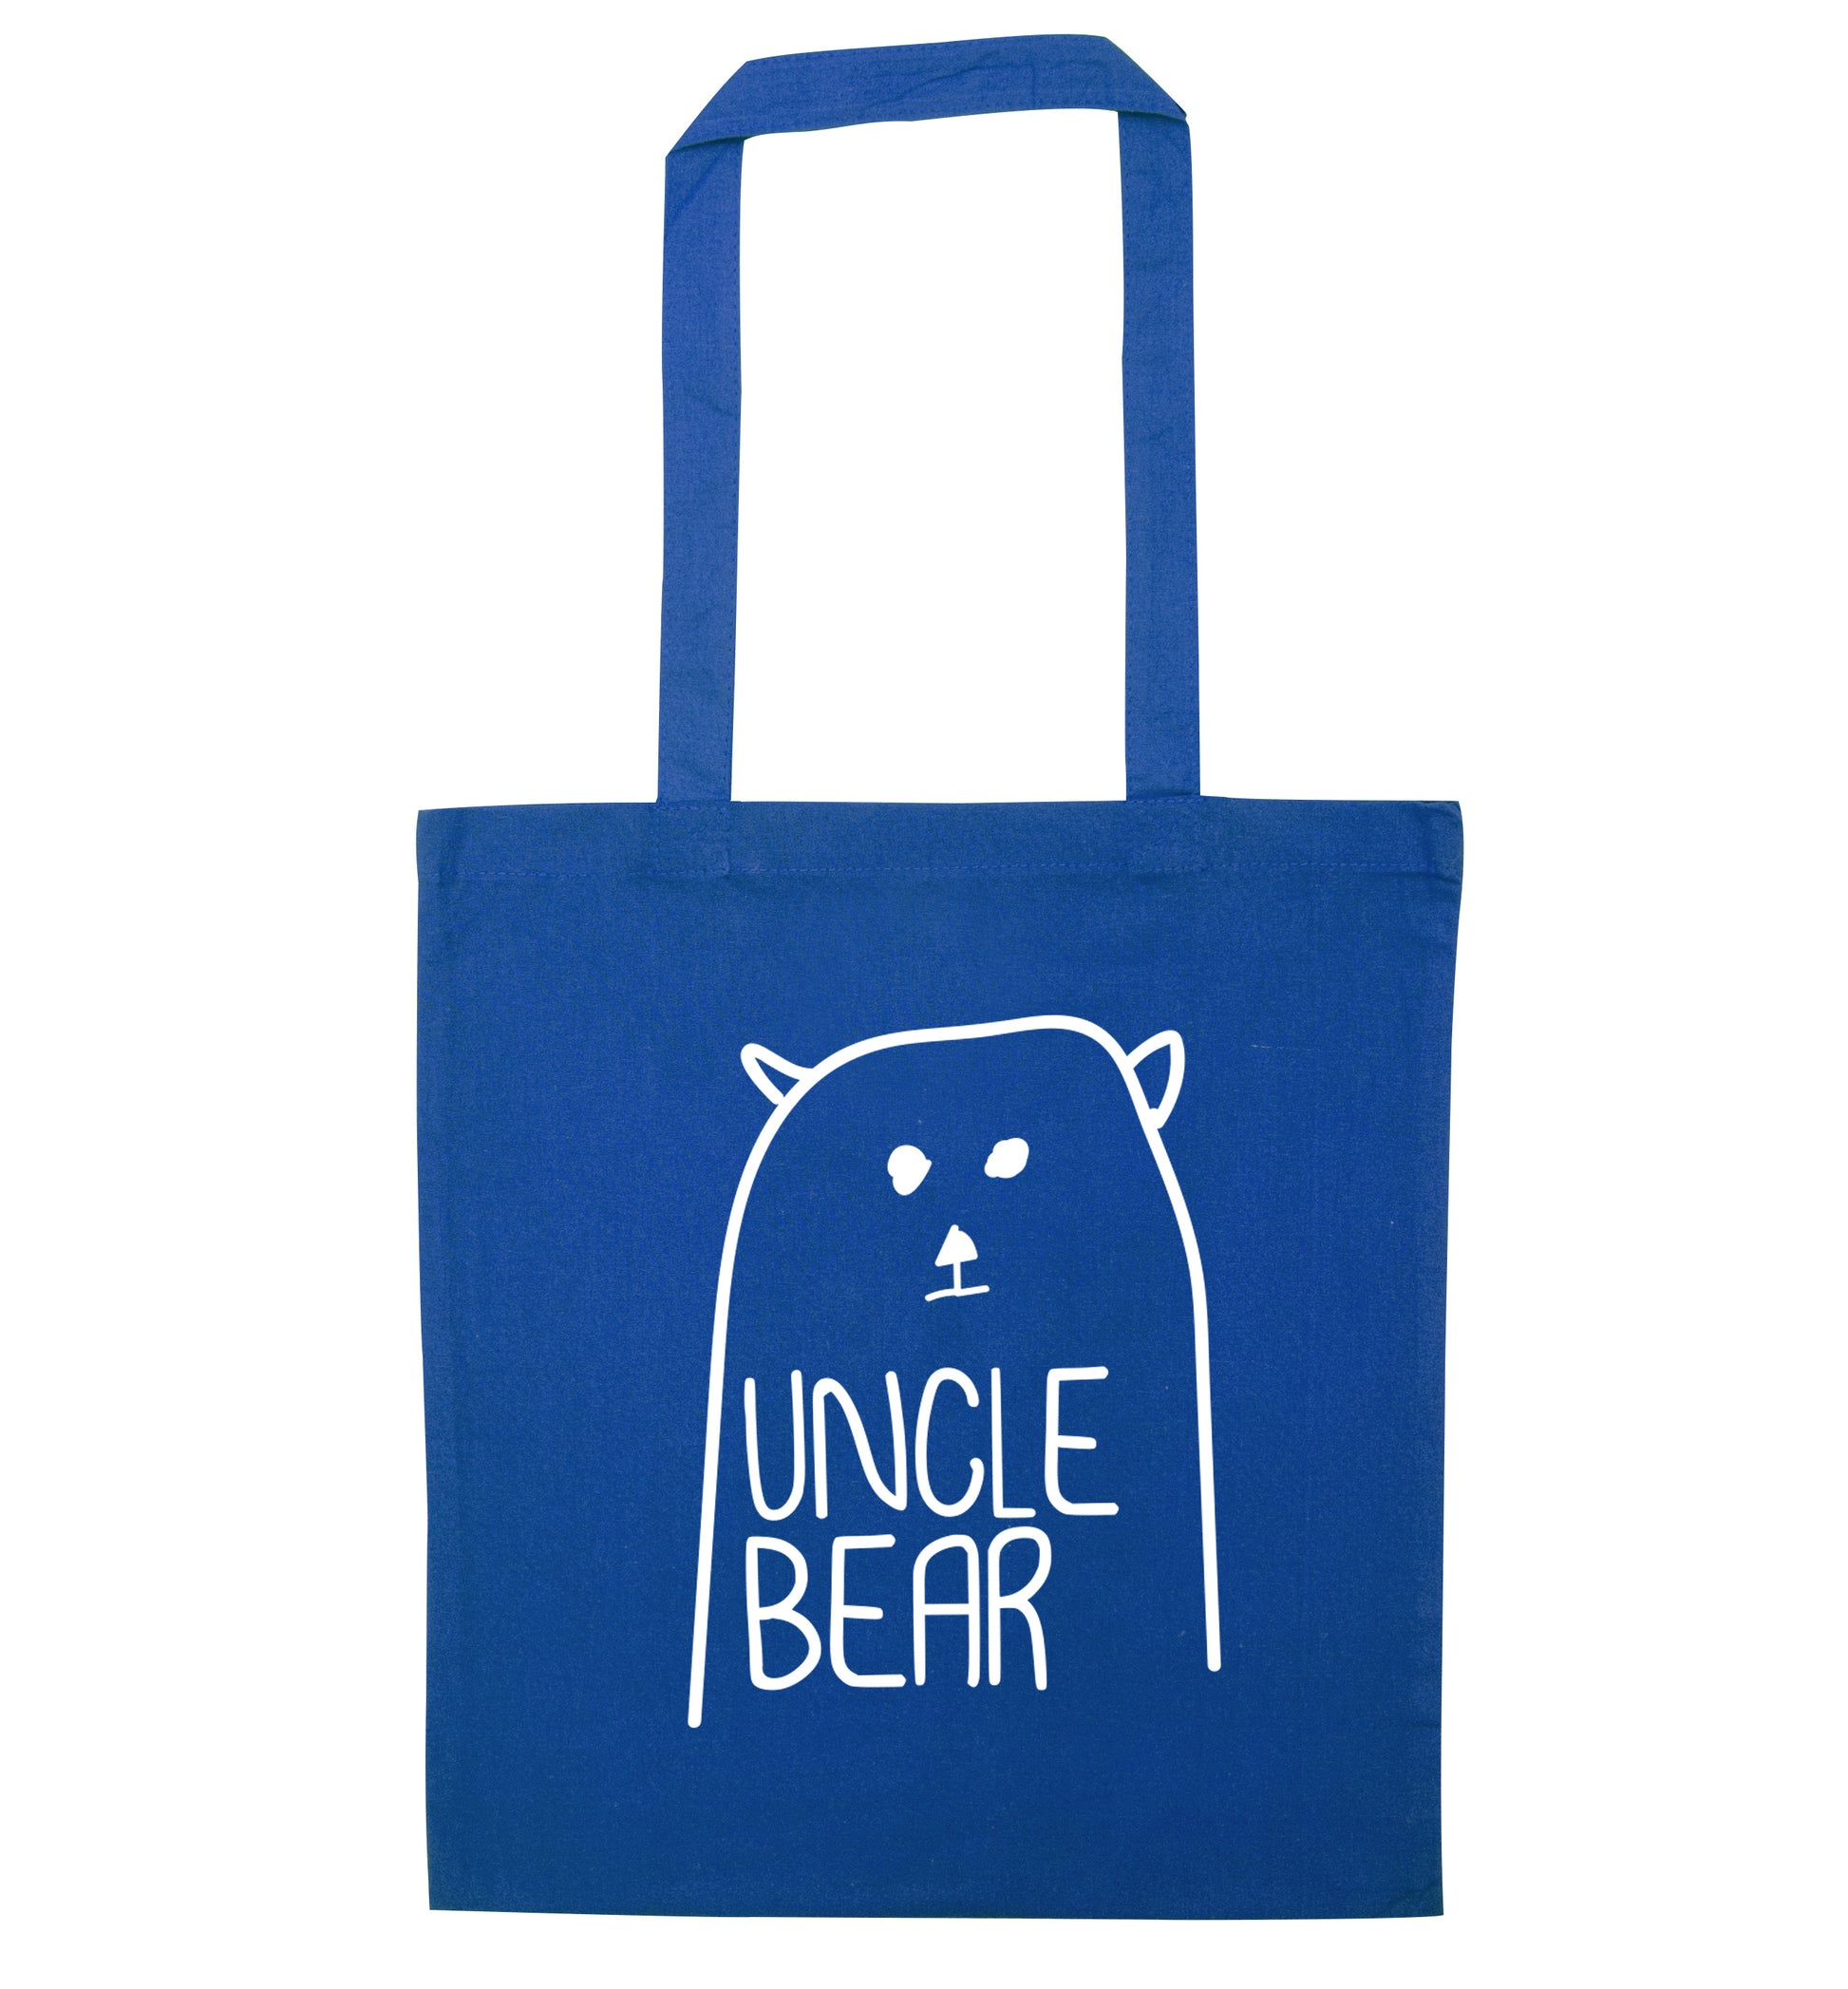 Uncle bear blue tote bag